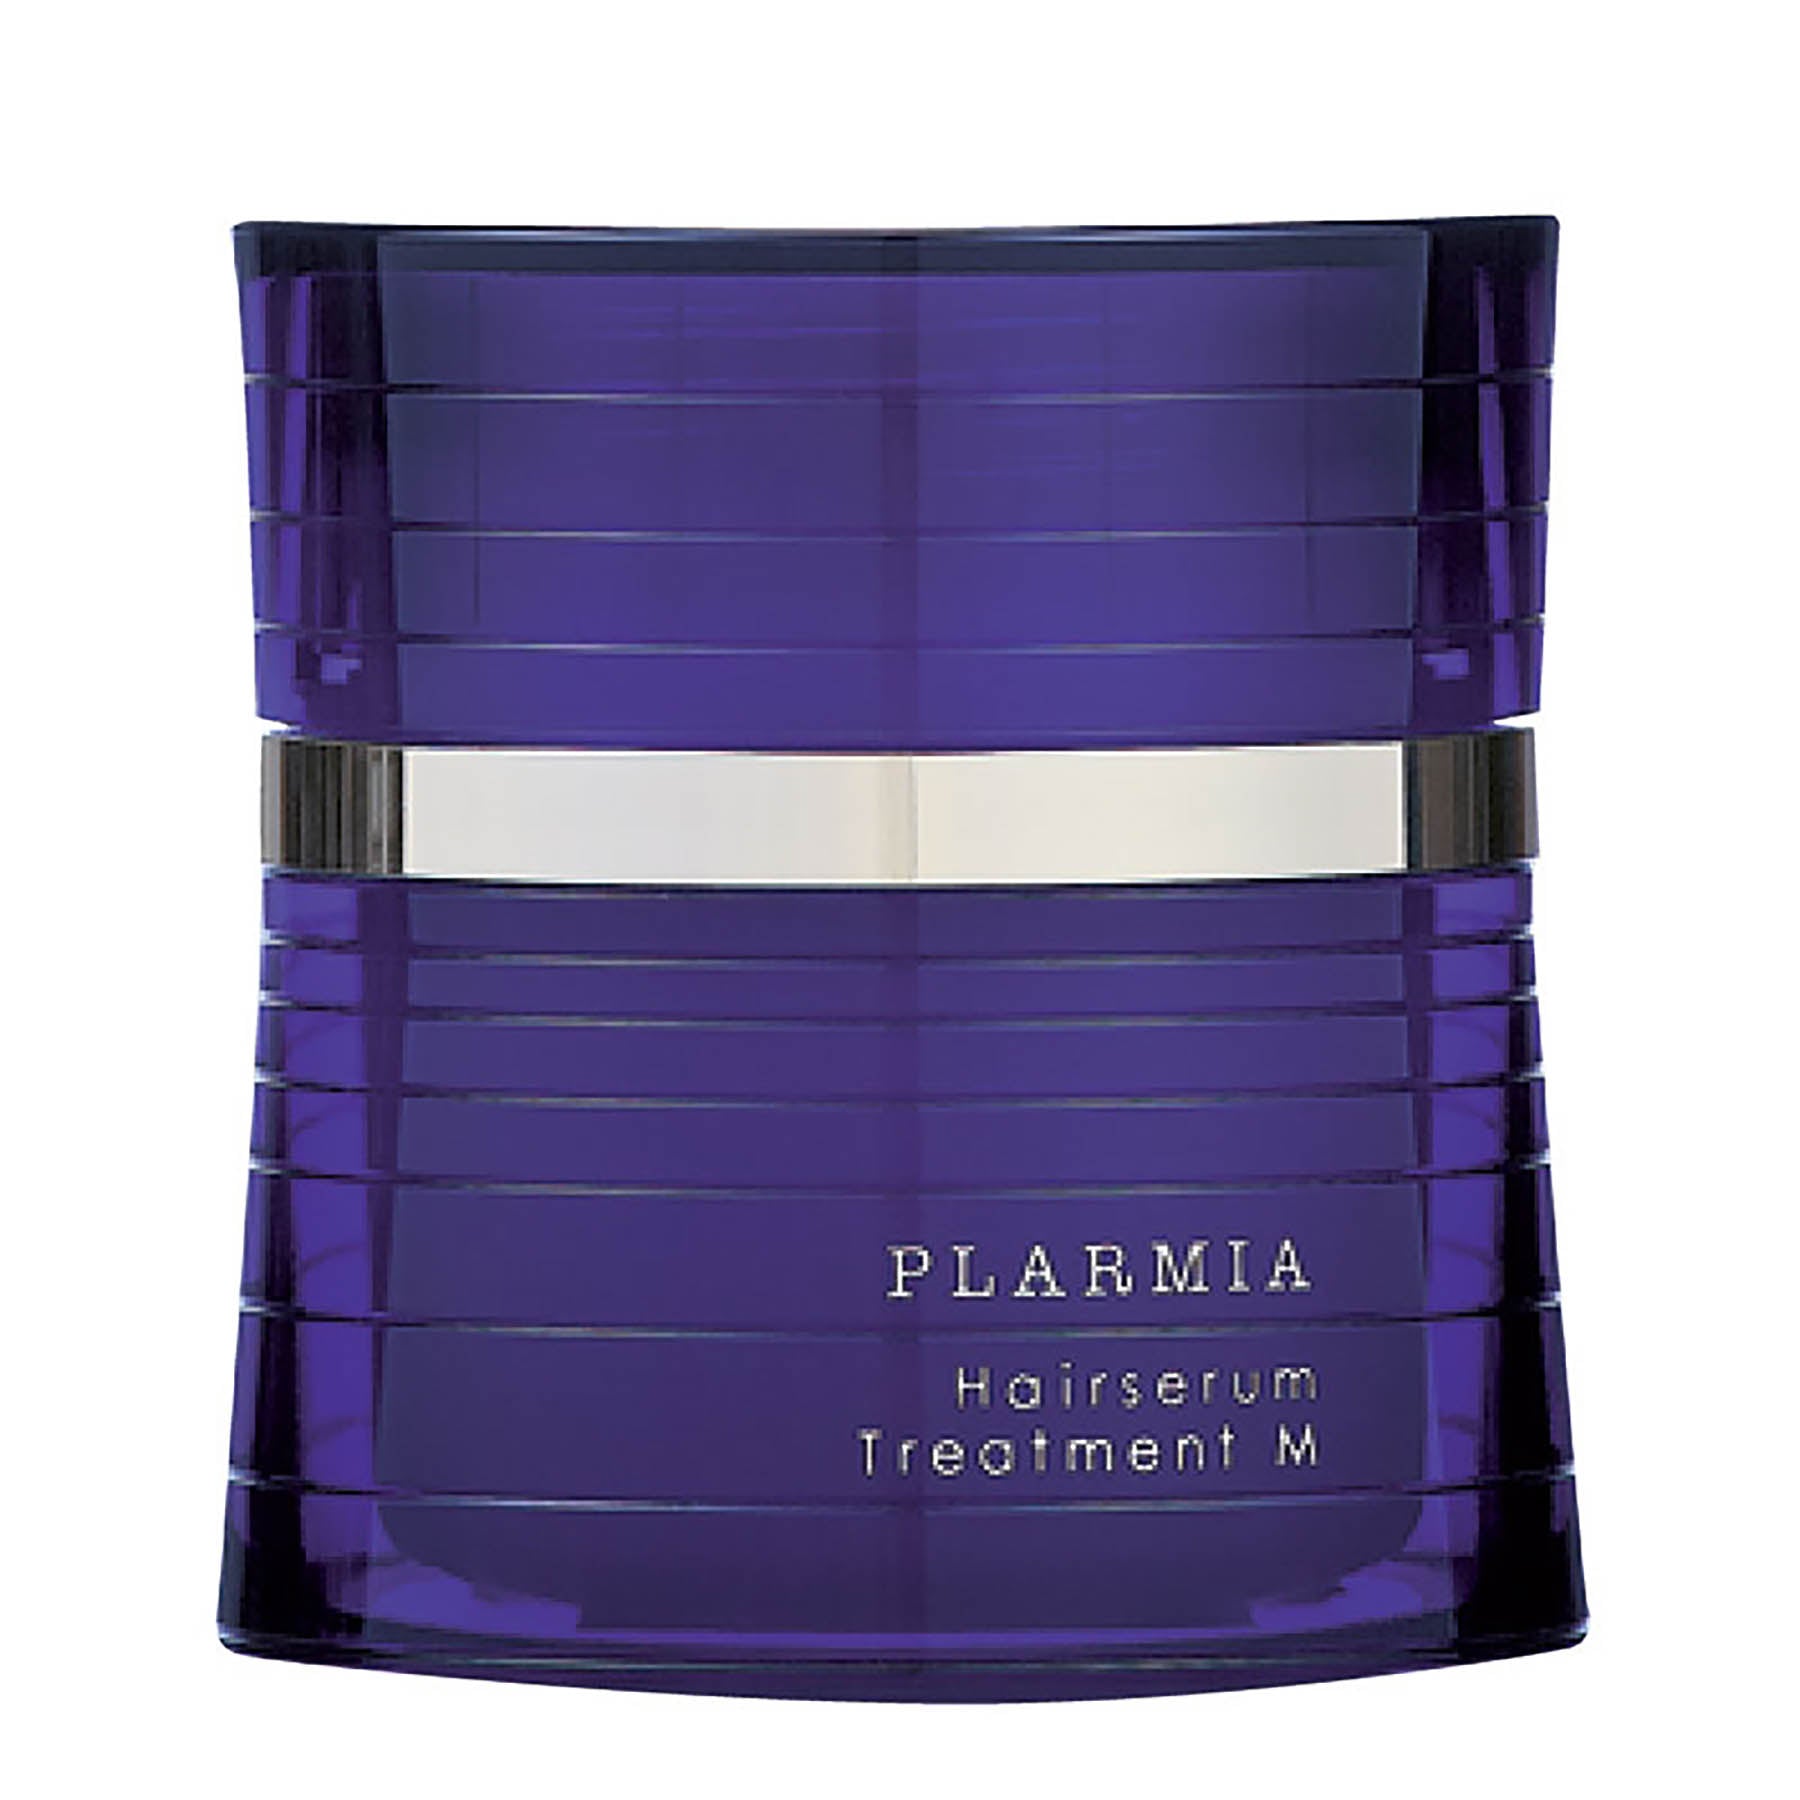 Plarmia Hairserum Treatment M